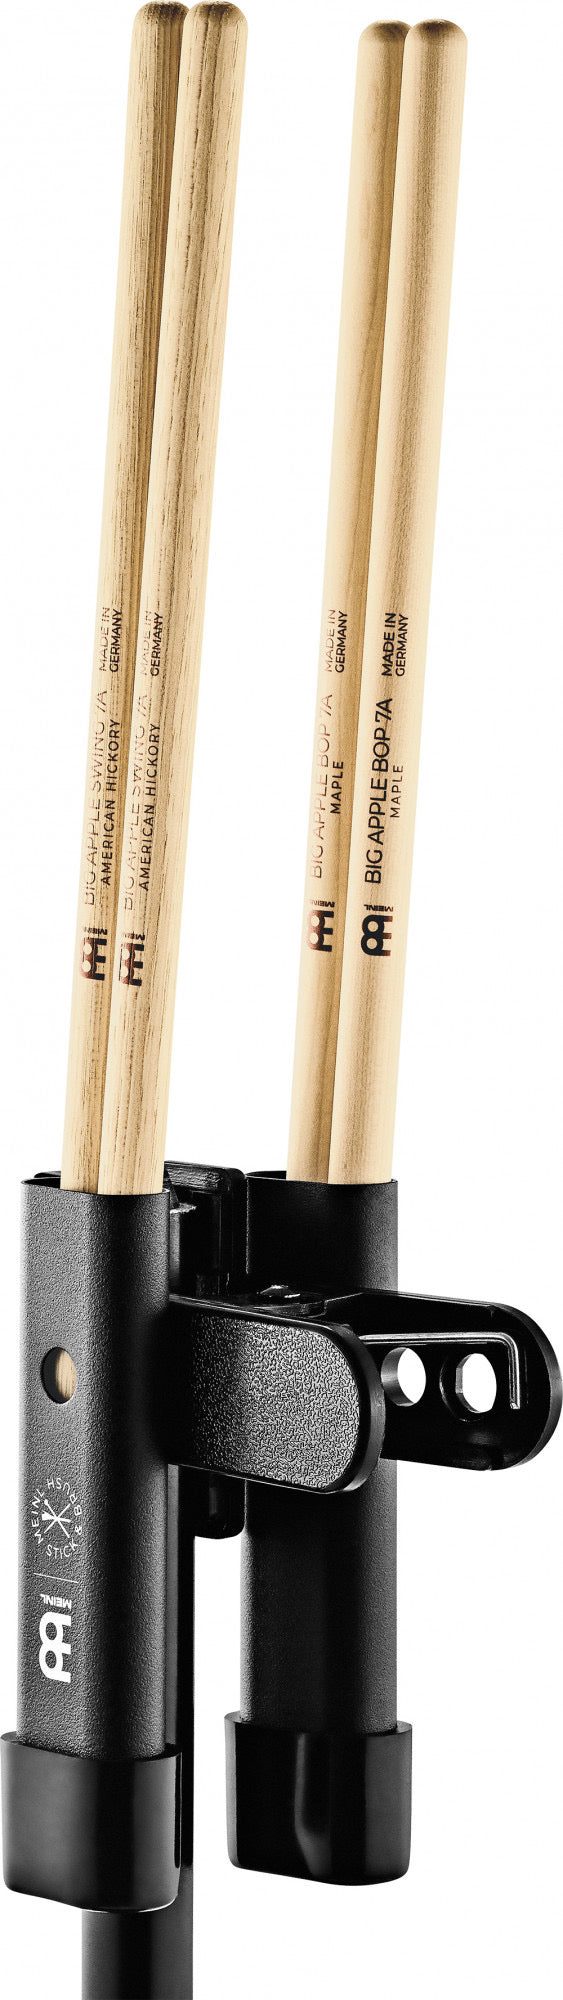 MEINL Stick & Brush - Stick Grabber (NEW)